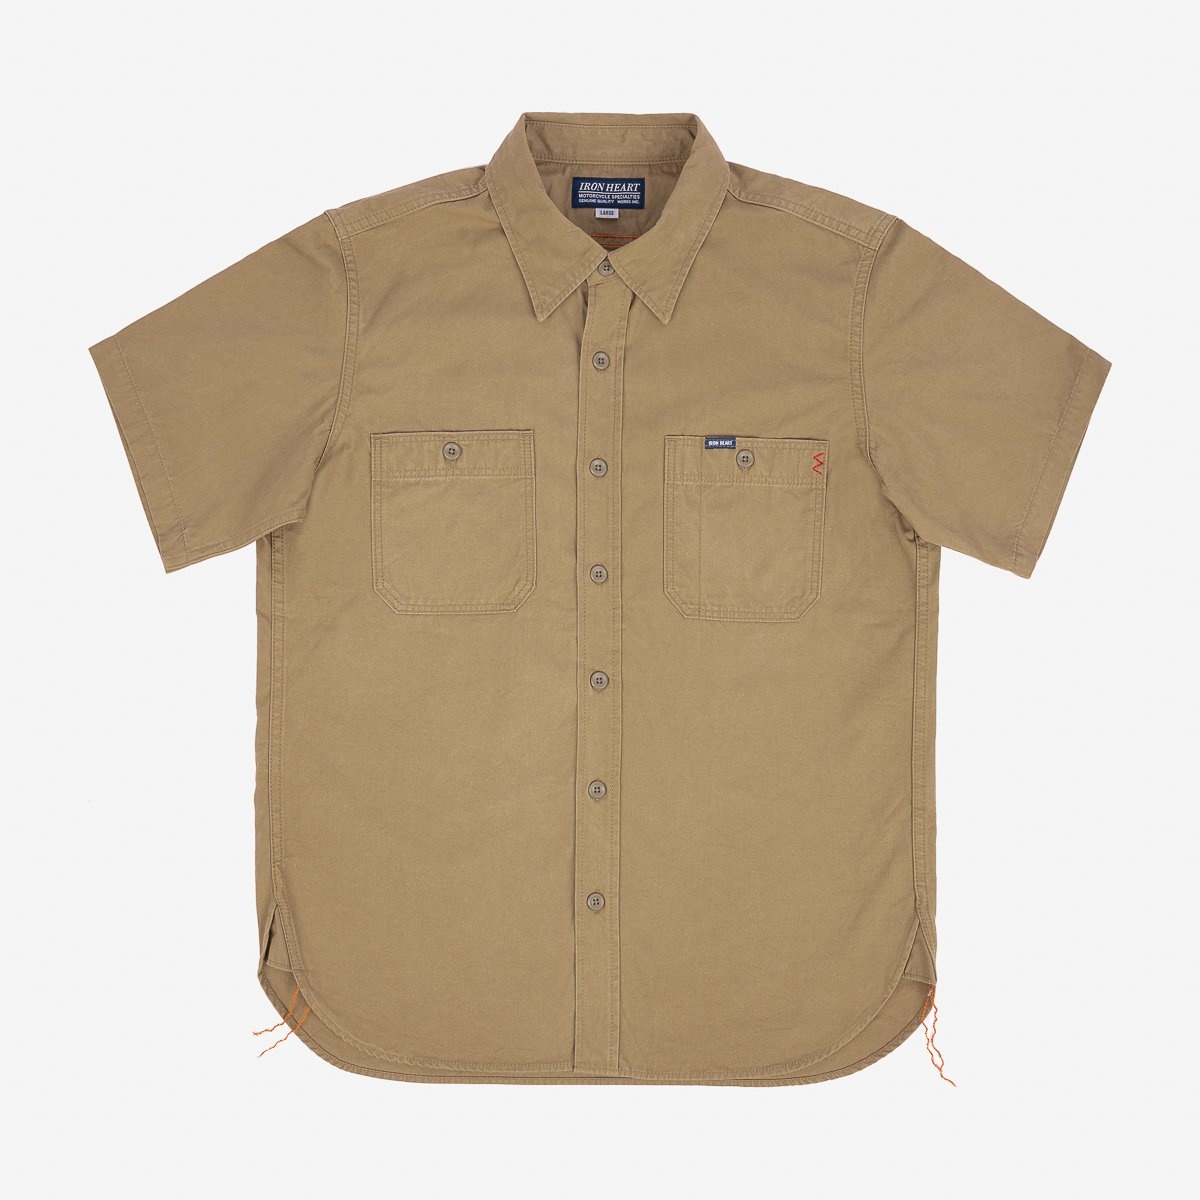 IHSH-393-KHA 7oz Fatigue Cloth Short Sleeved Work Shirt - Khaki - 1